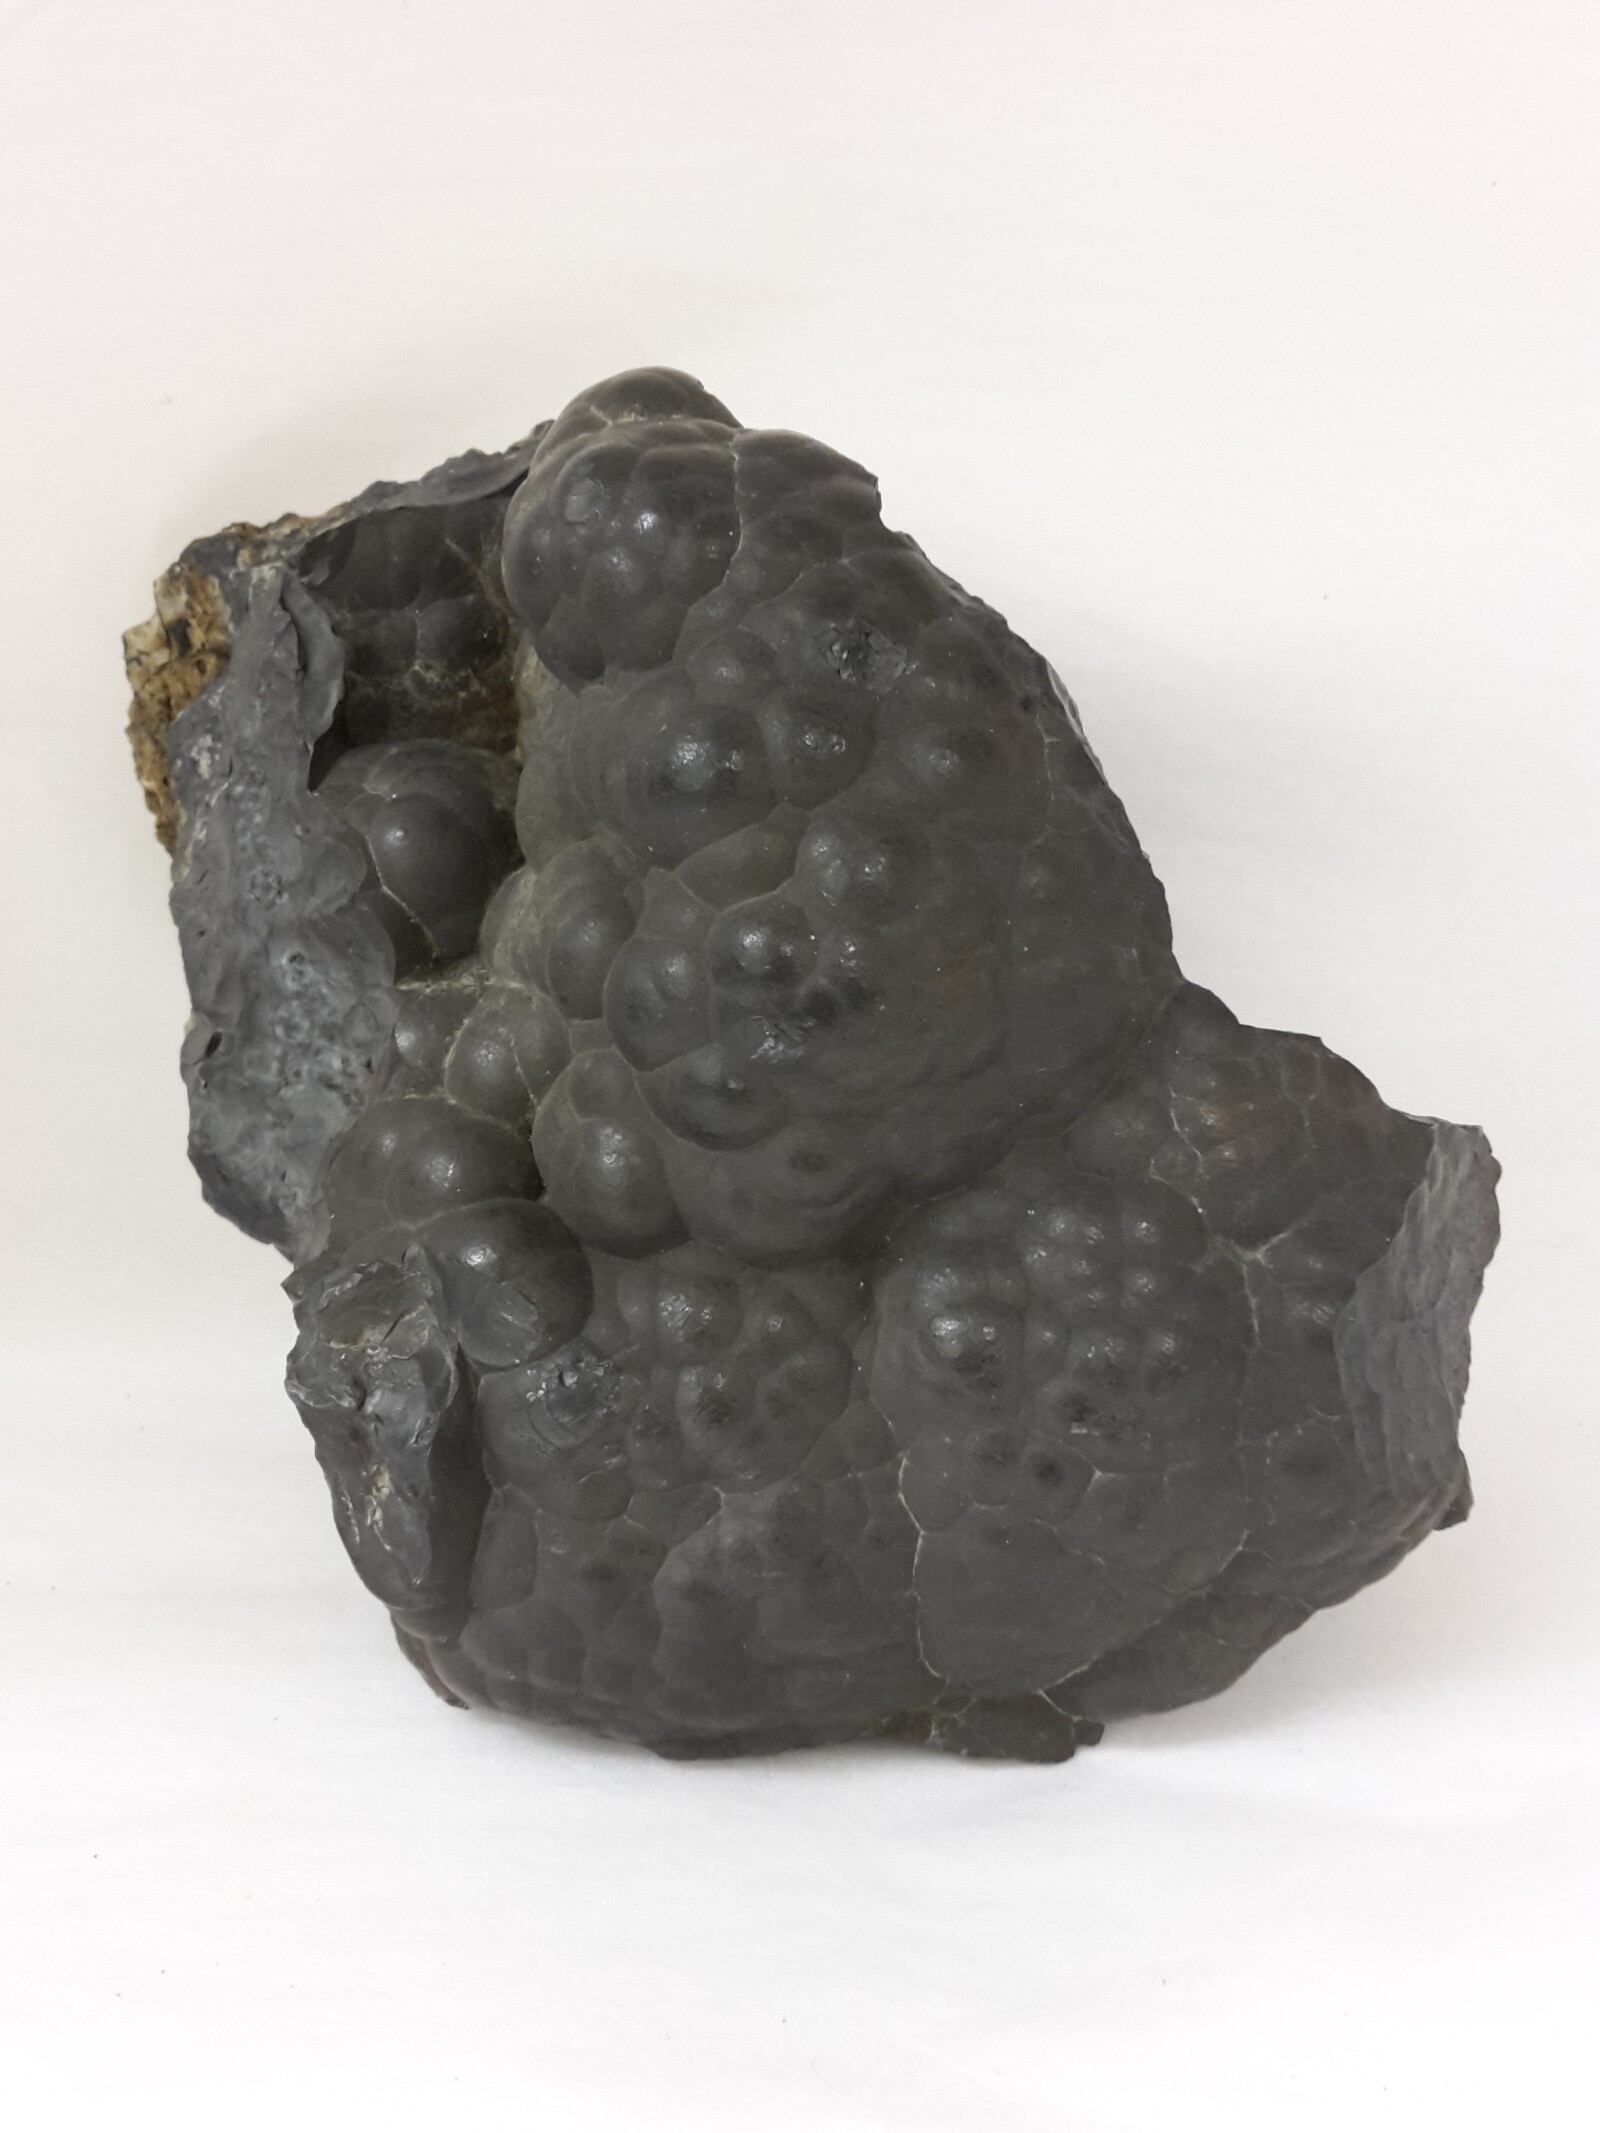 Botryoidal aggregate of cryptomelane-hollandite from Mynydd Nodol mine, Arenig, Merionethshire. Specimen 11 cm tall. NMW 27.111.GR.27, ex G. J. Williams collection.